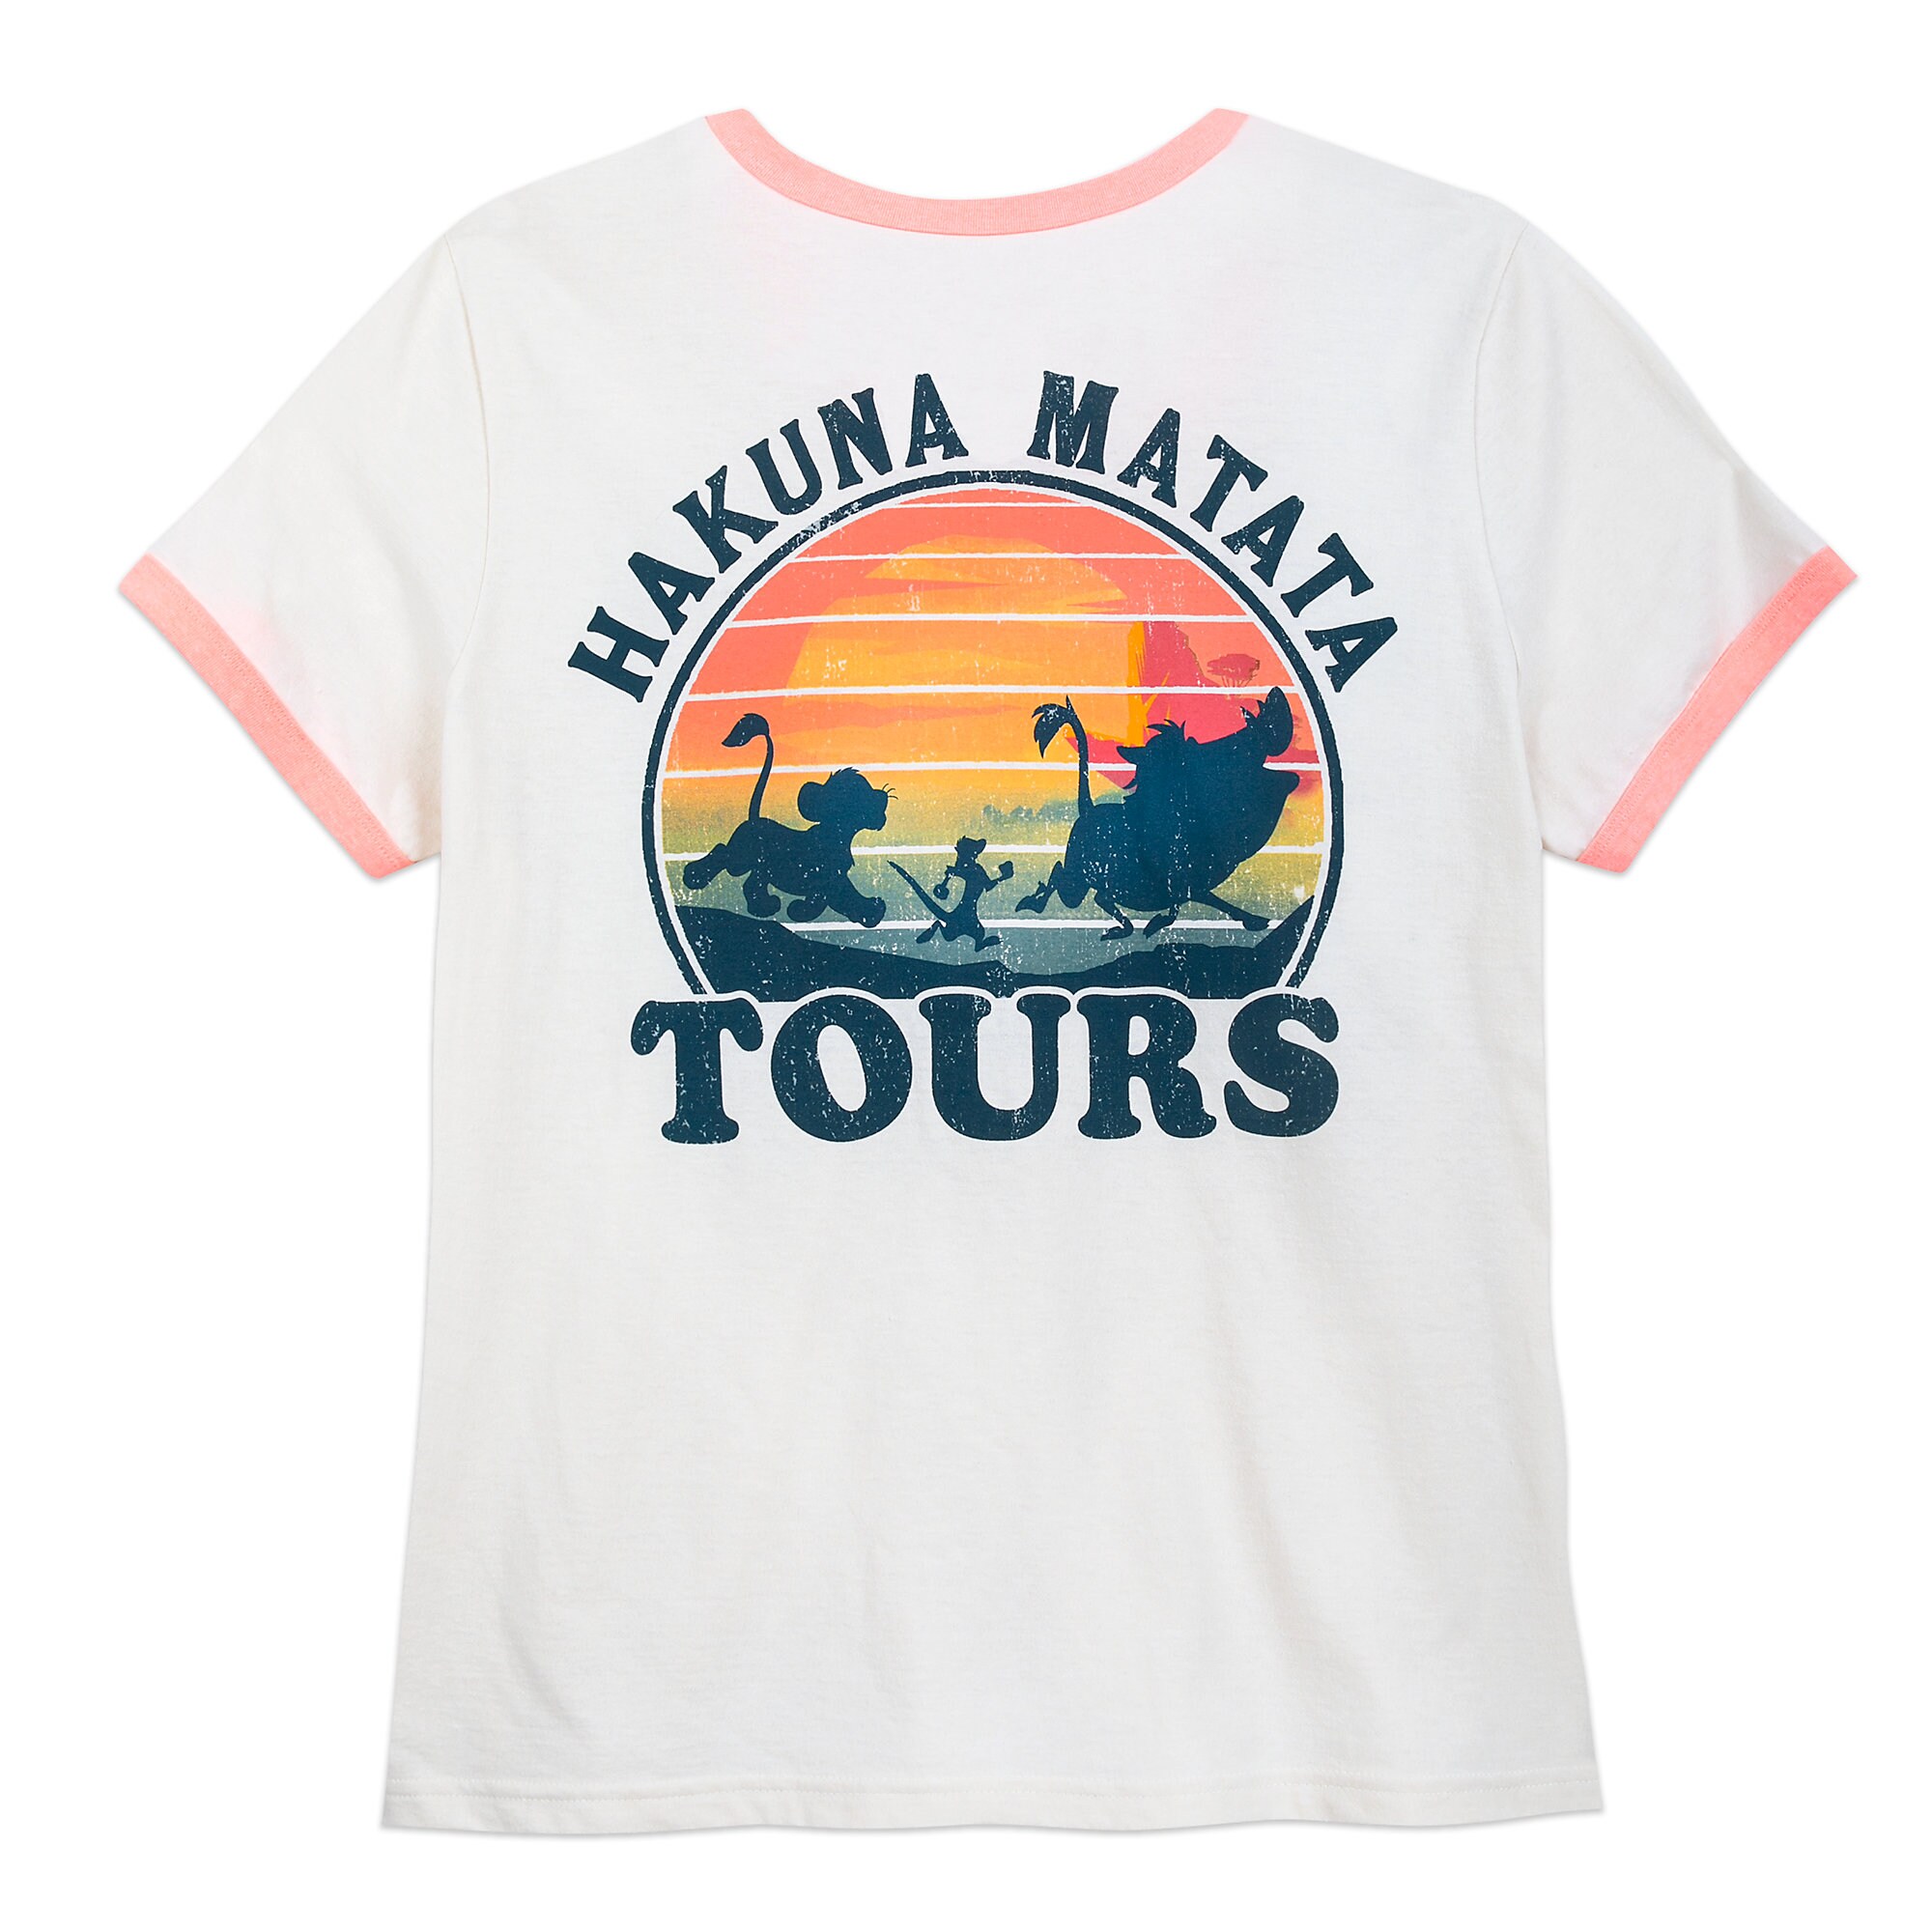 Hakuna Matata Tours Ringer T-Shirt for Women - The Lion King - Extended Size